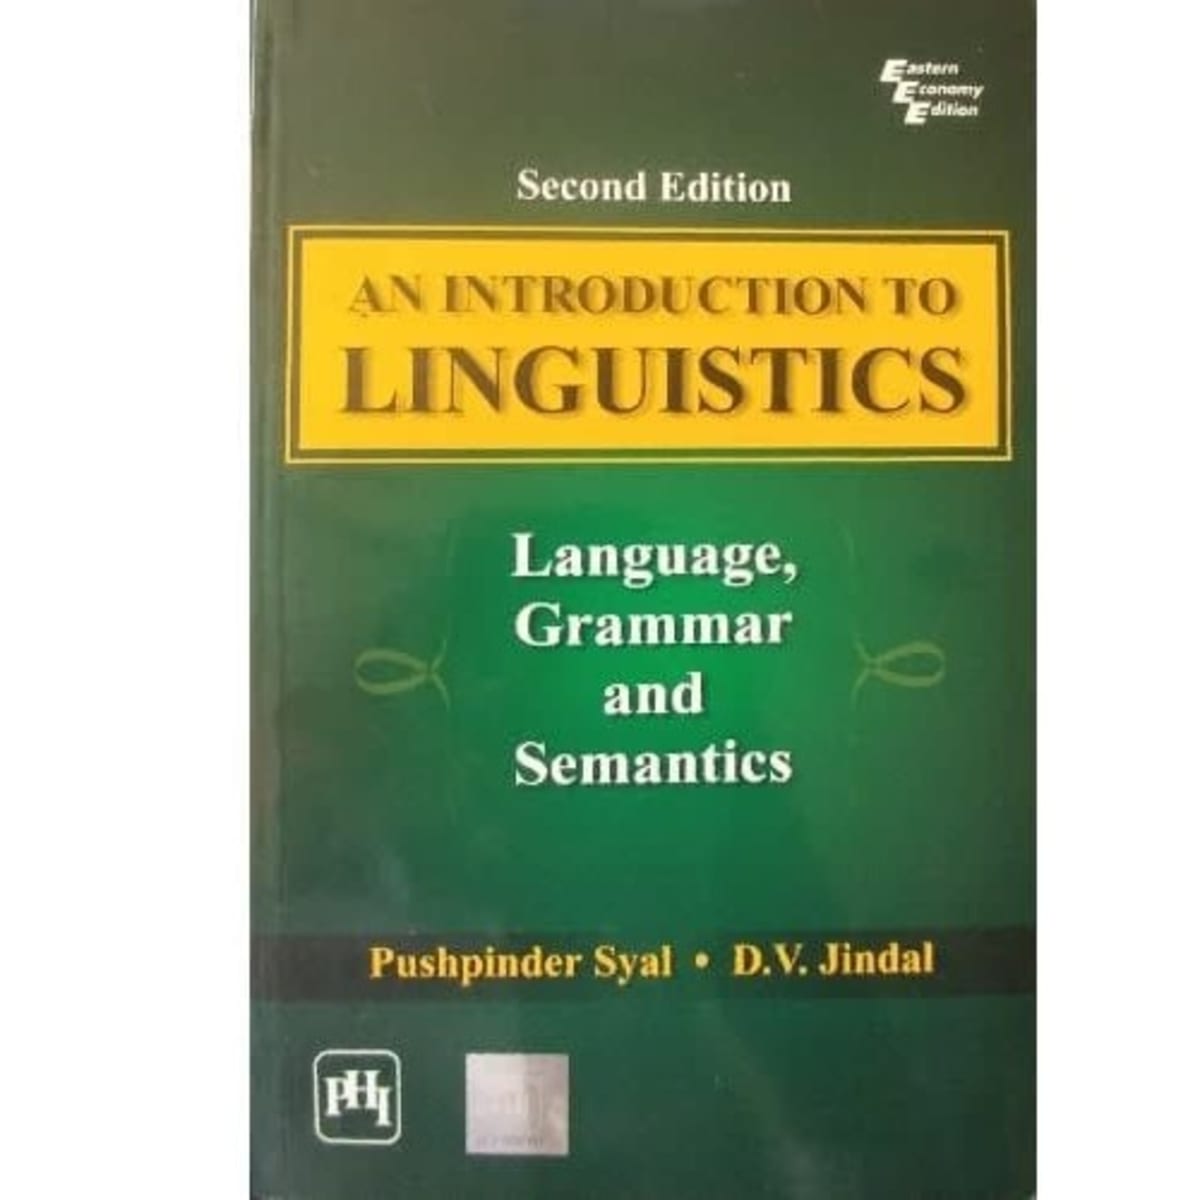 An　Semantics　Introduction　And　Shopping　To　Language　Linguistics　Grammar　Konga　Online